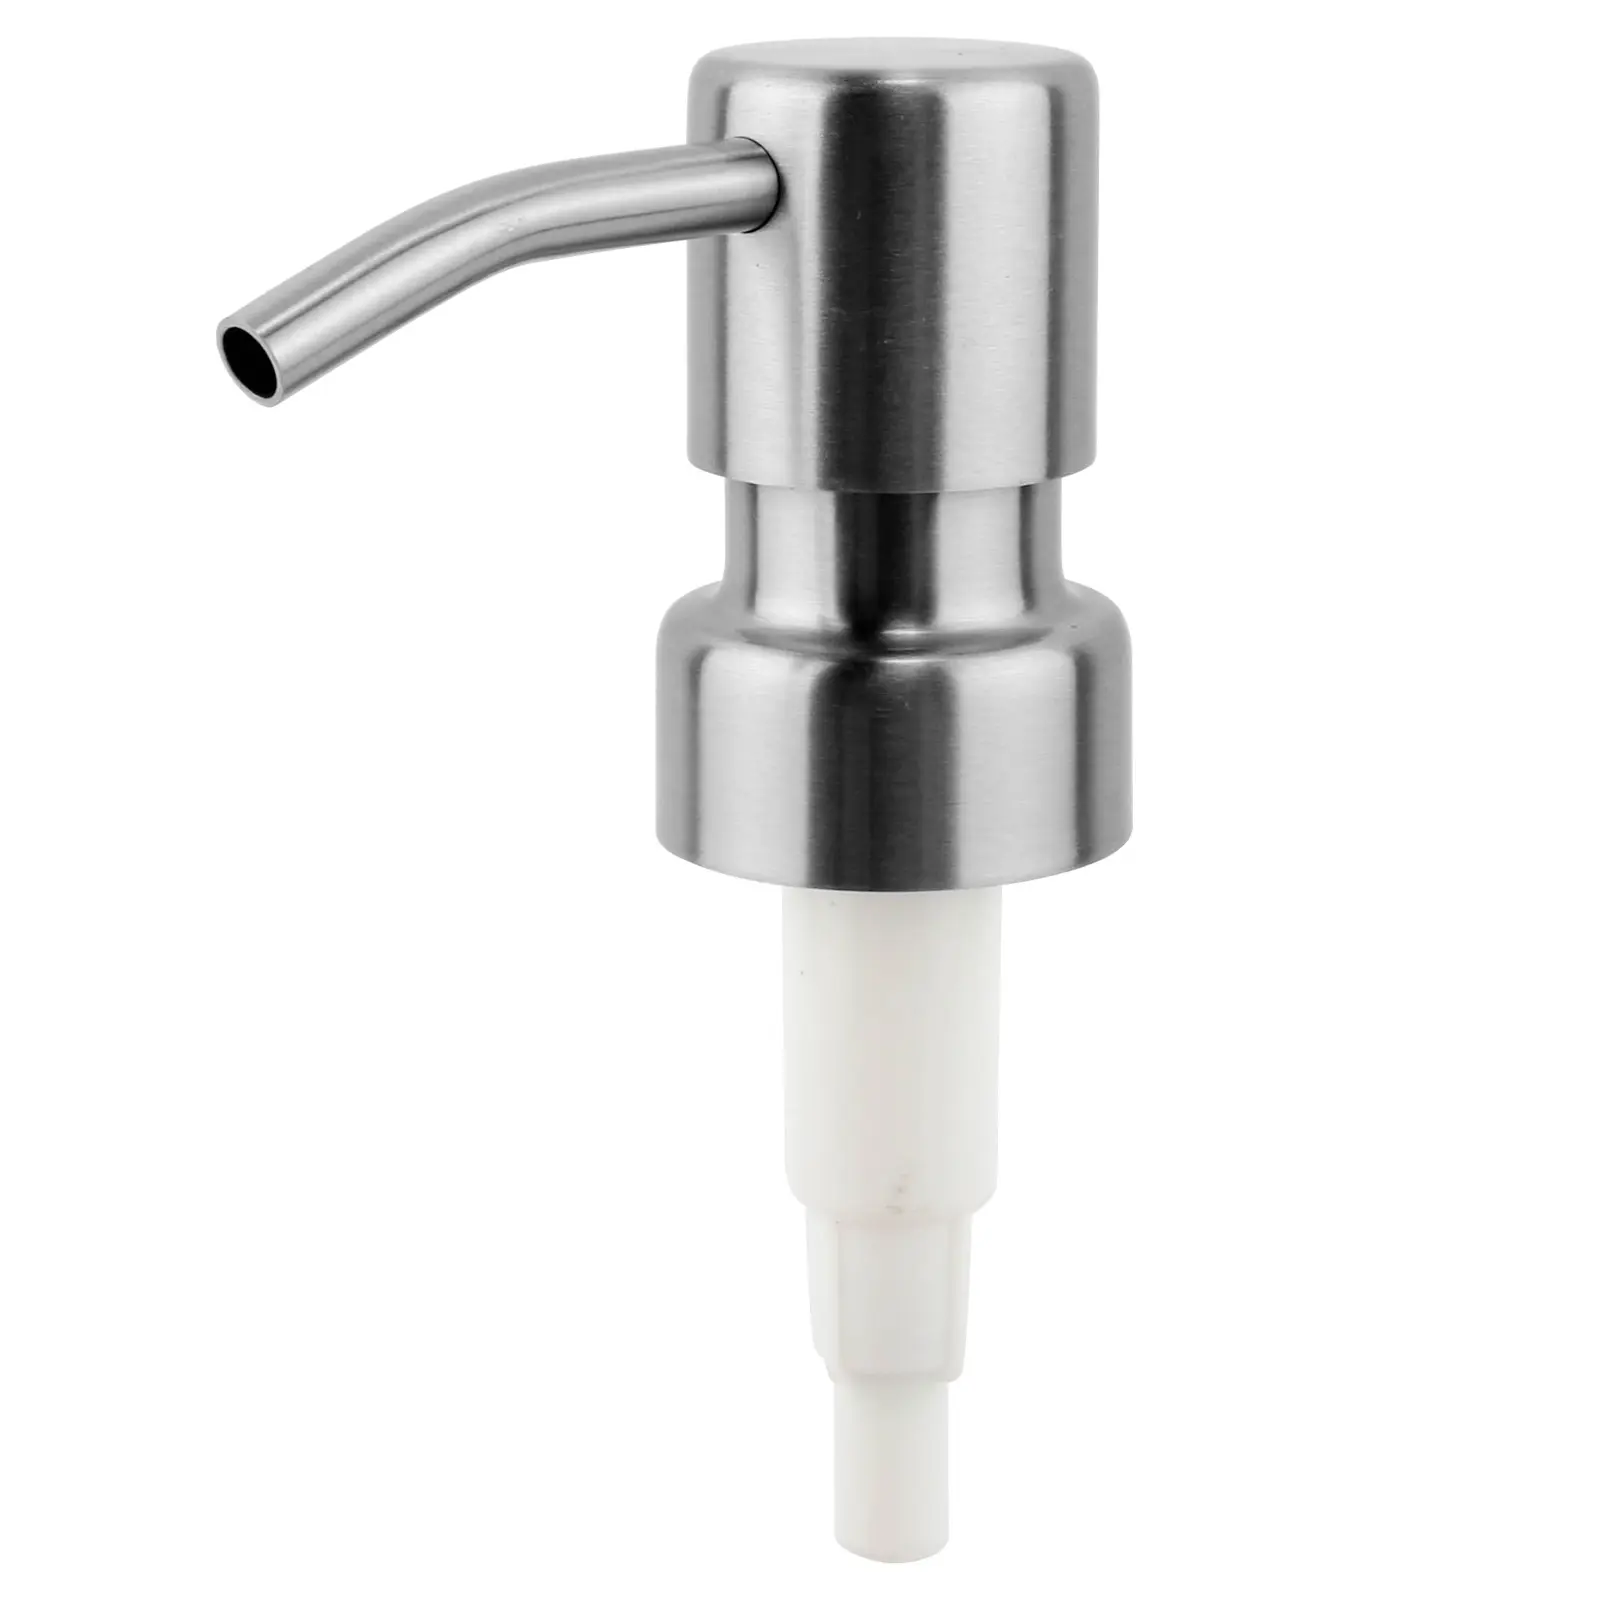 Wholesale custom bathroom sets dispenser pump, stainless steel 304 lotion pump